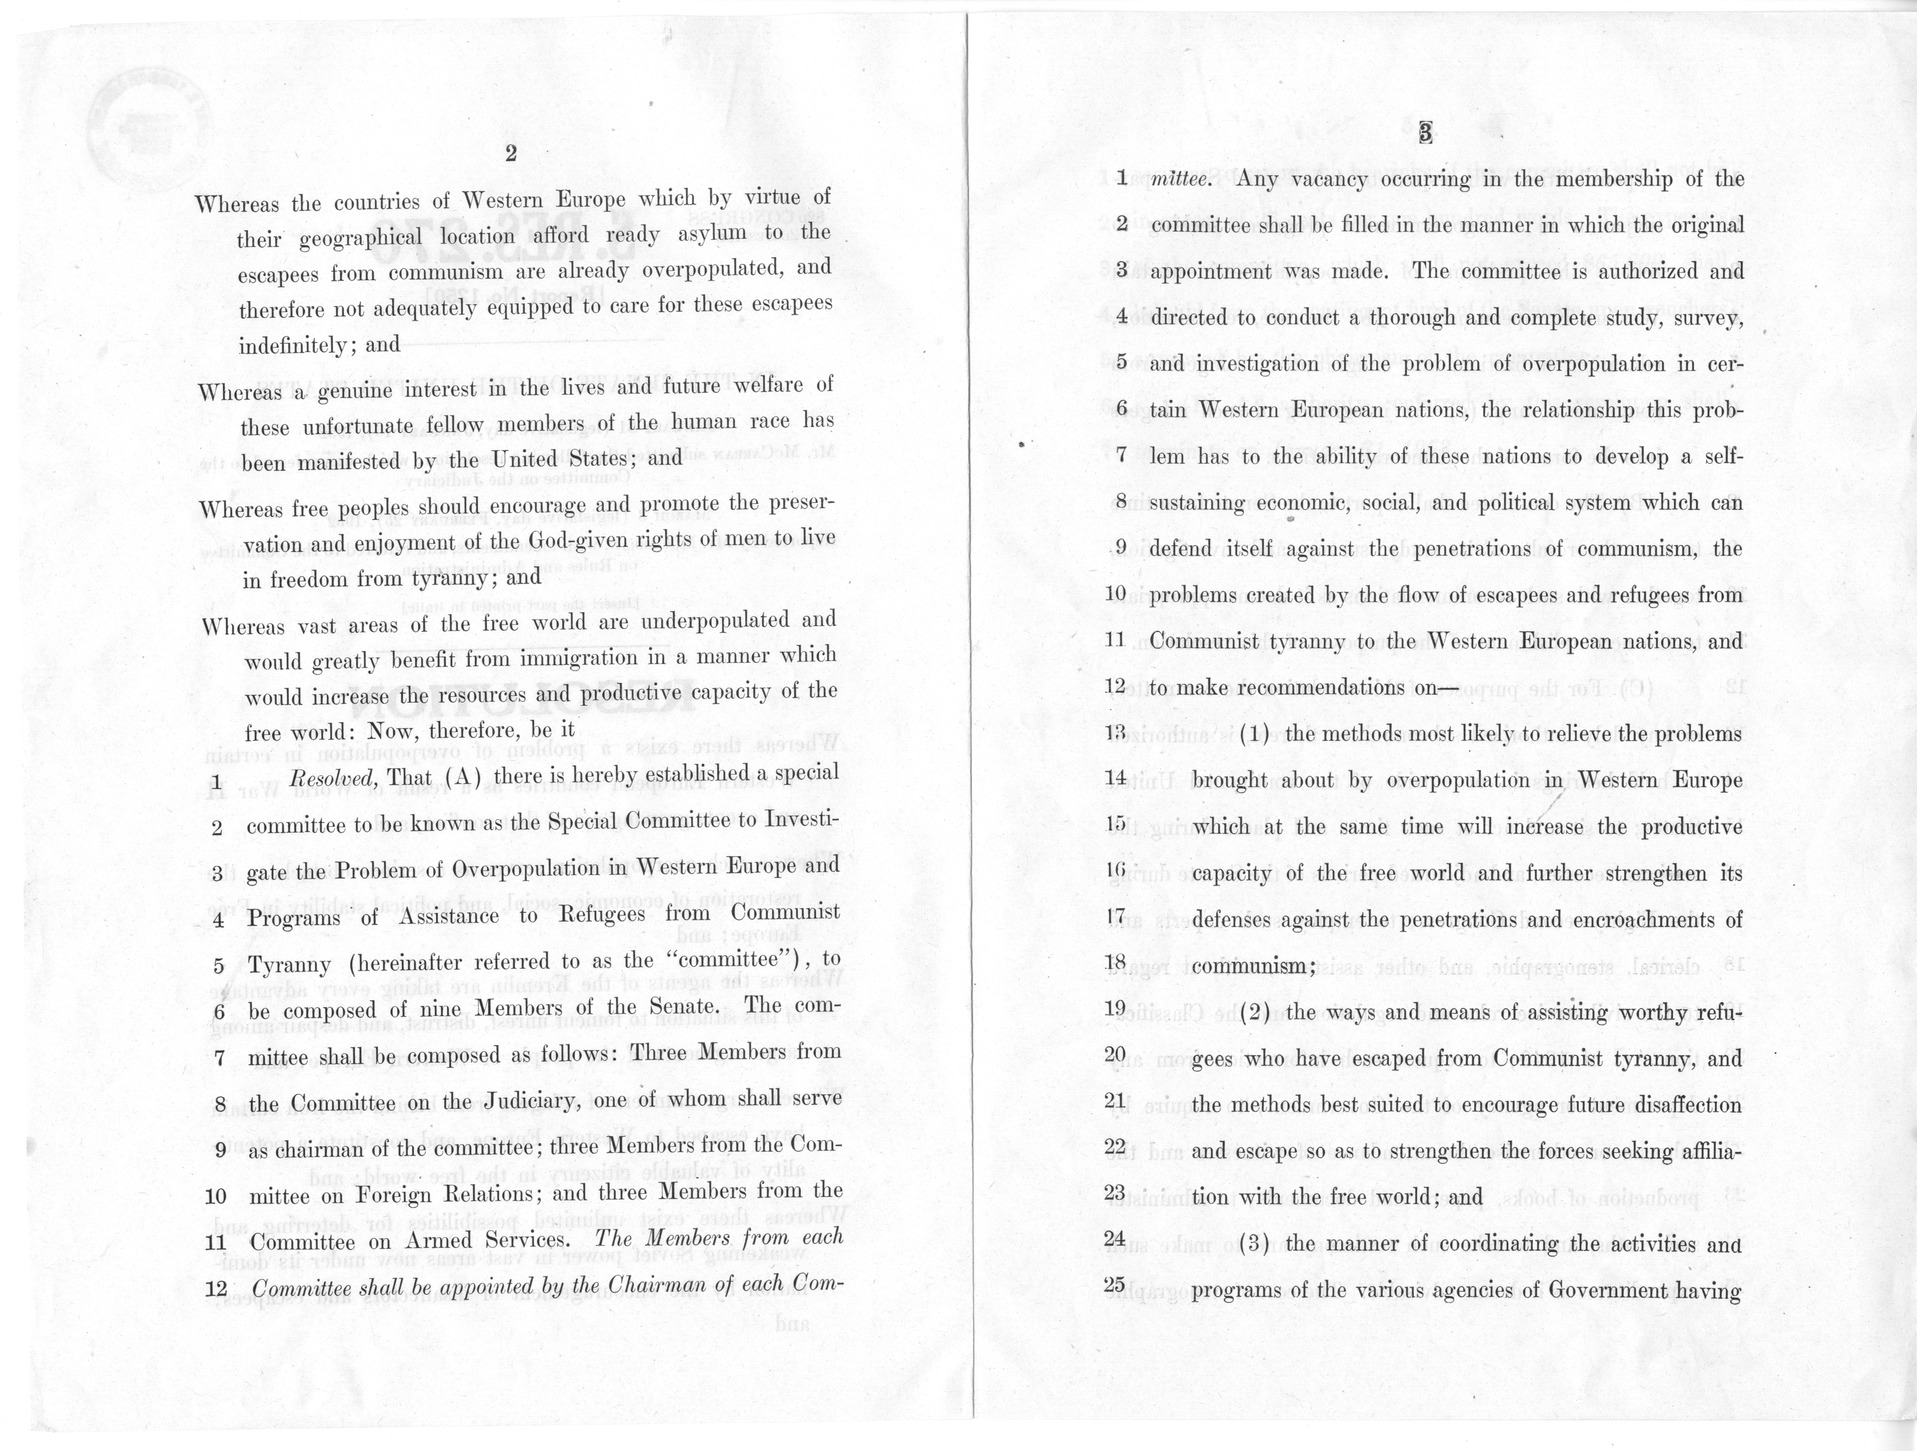 Senate Resolution 270, 82nd Congress, Second Session